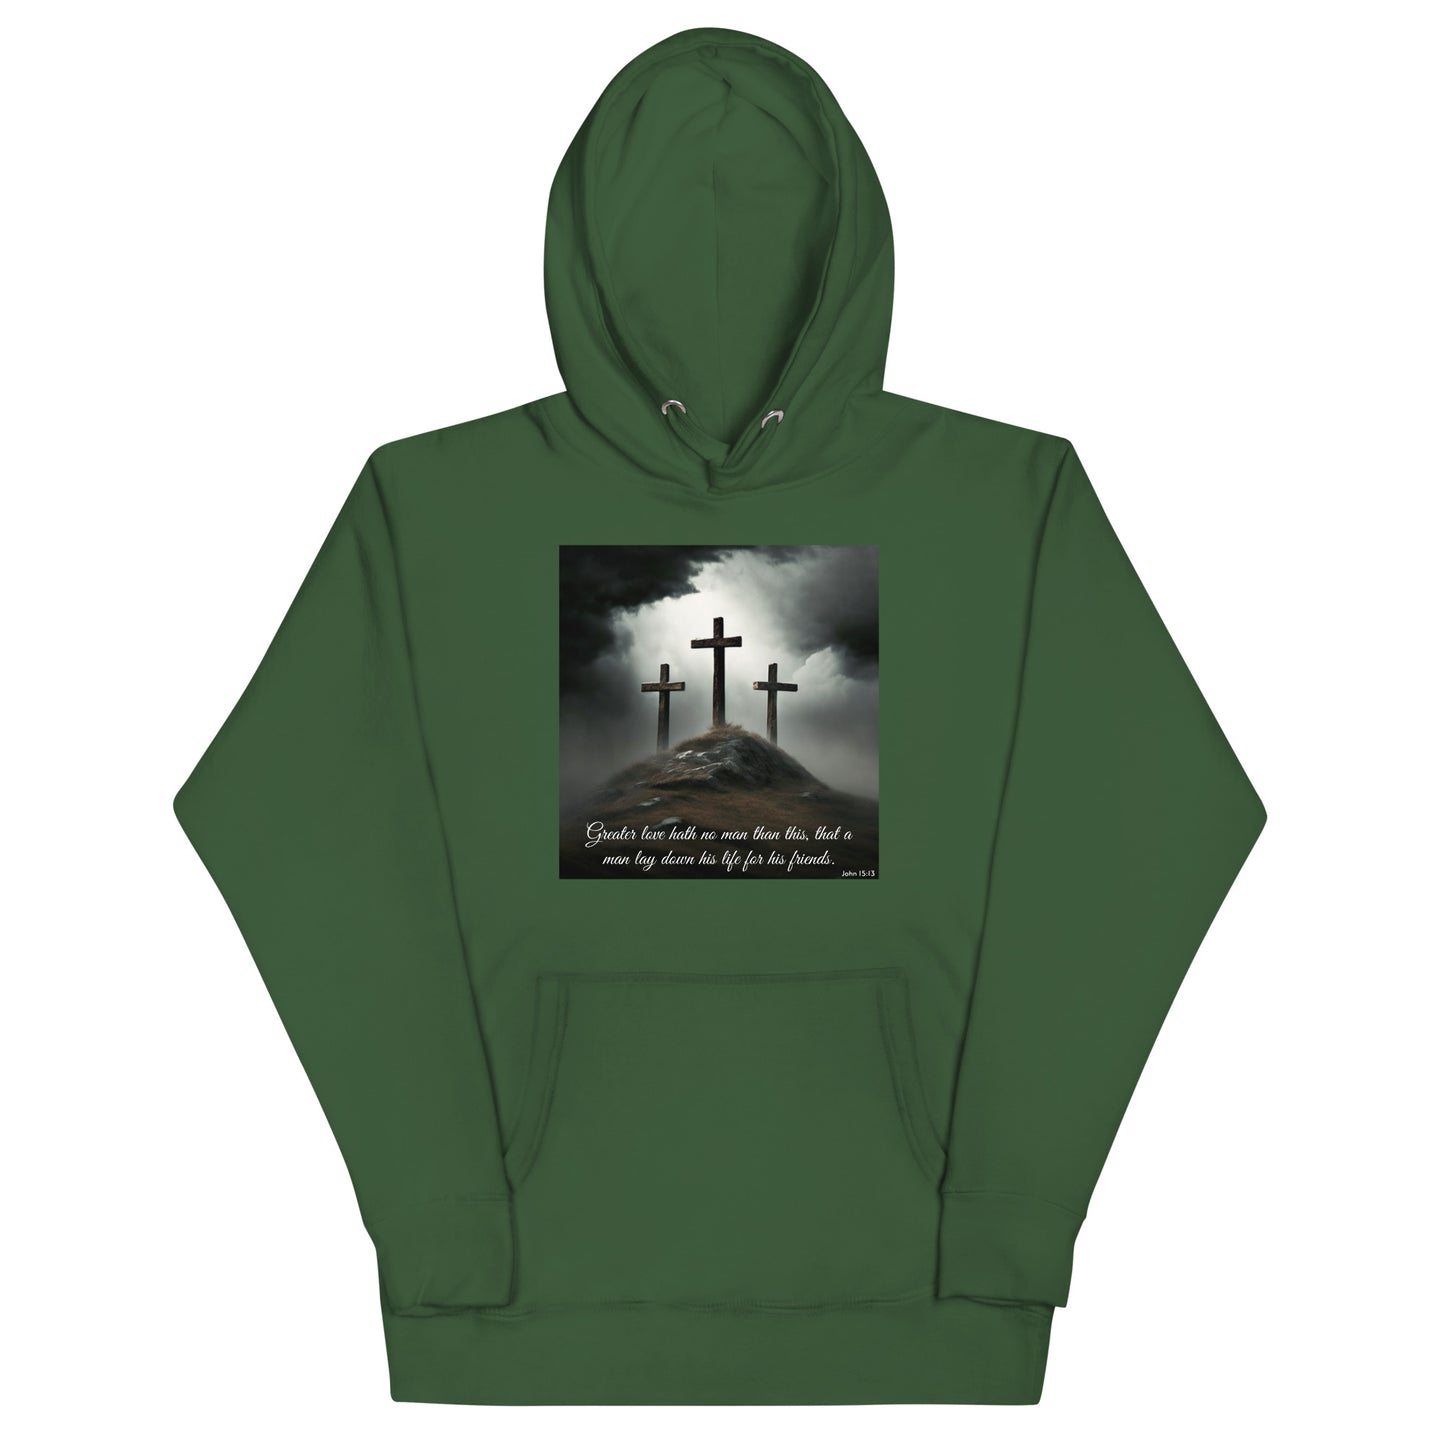 Three Crosses Crucifixion Men's Hooded Sweatshirt John 15:13 Forest Green